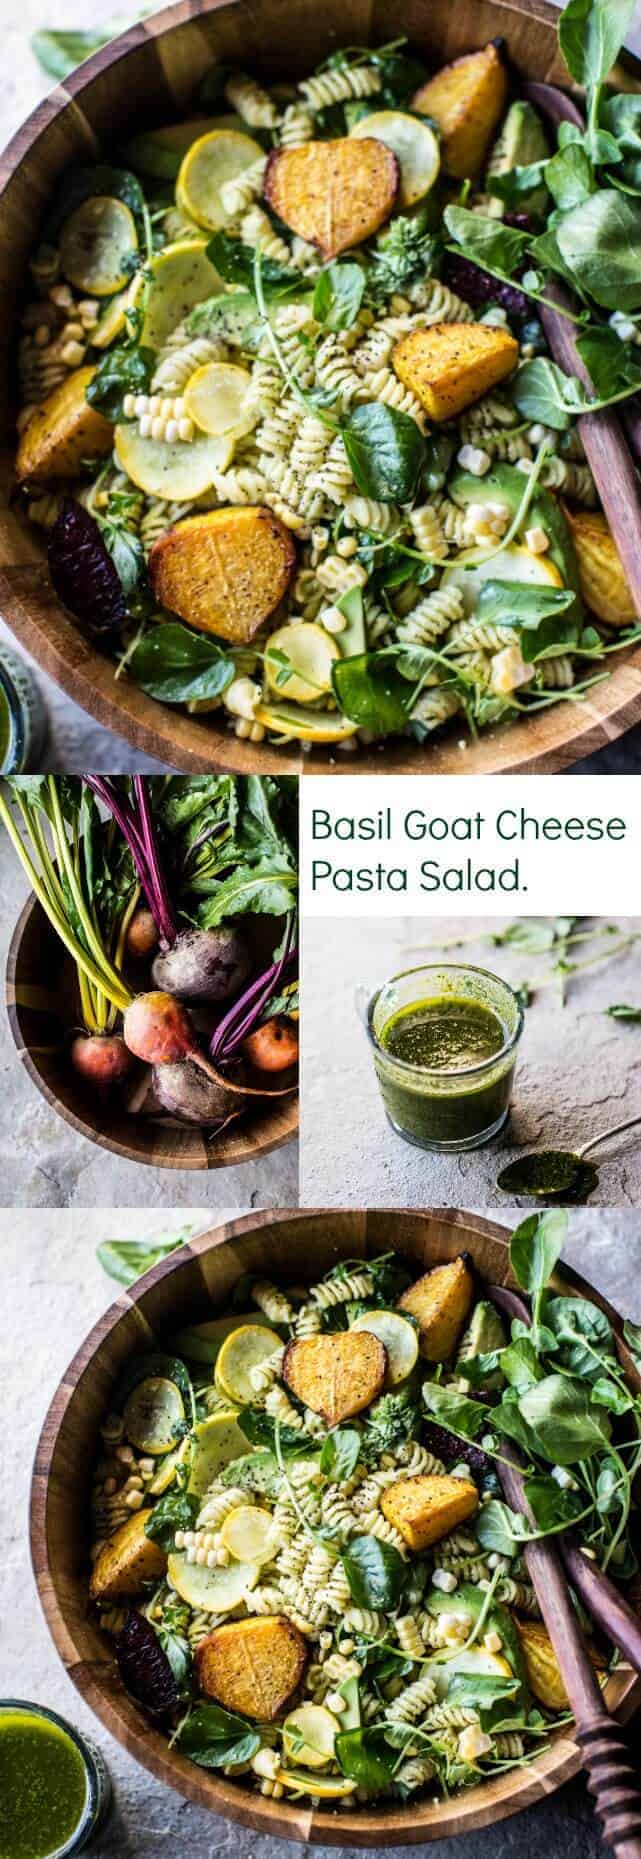 Basil Goat Cheese Pasta Salad | halfbakedharvest.com @hbharvest